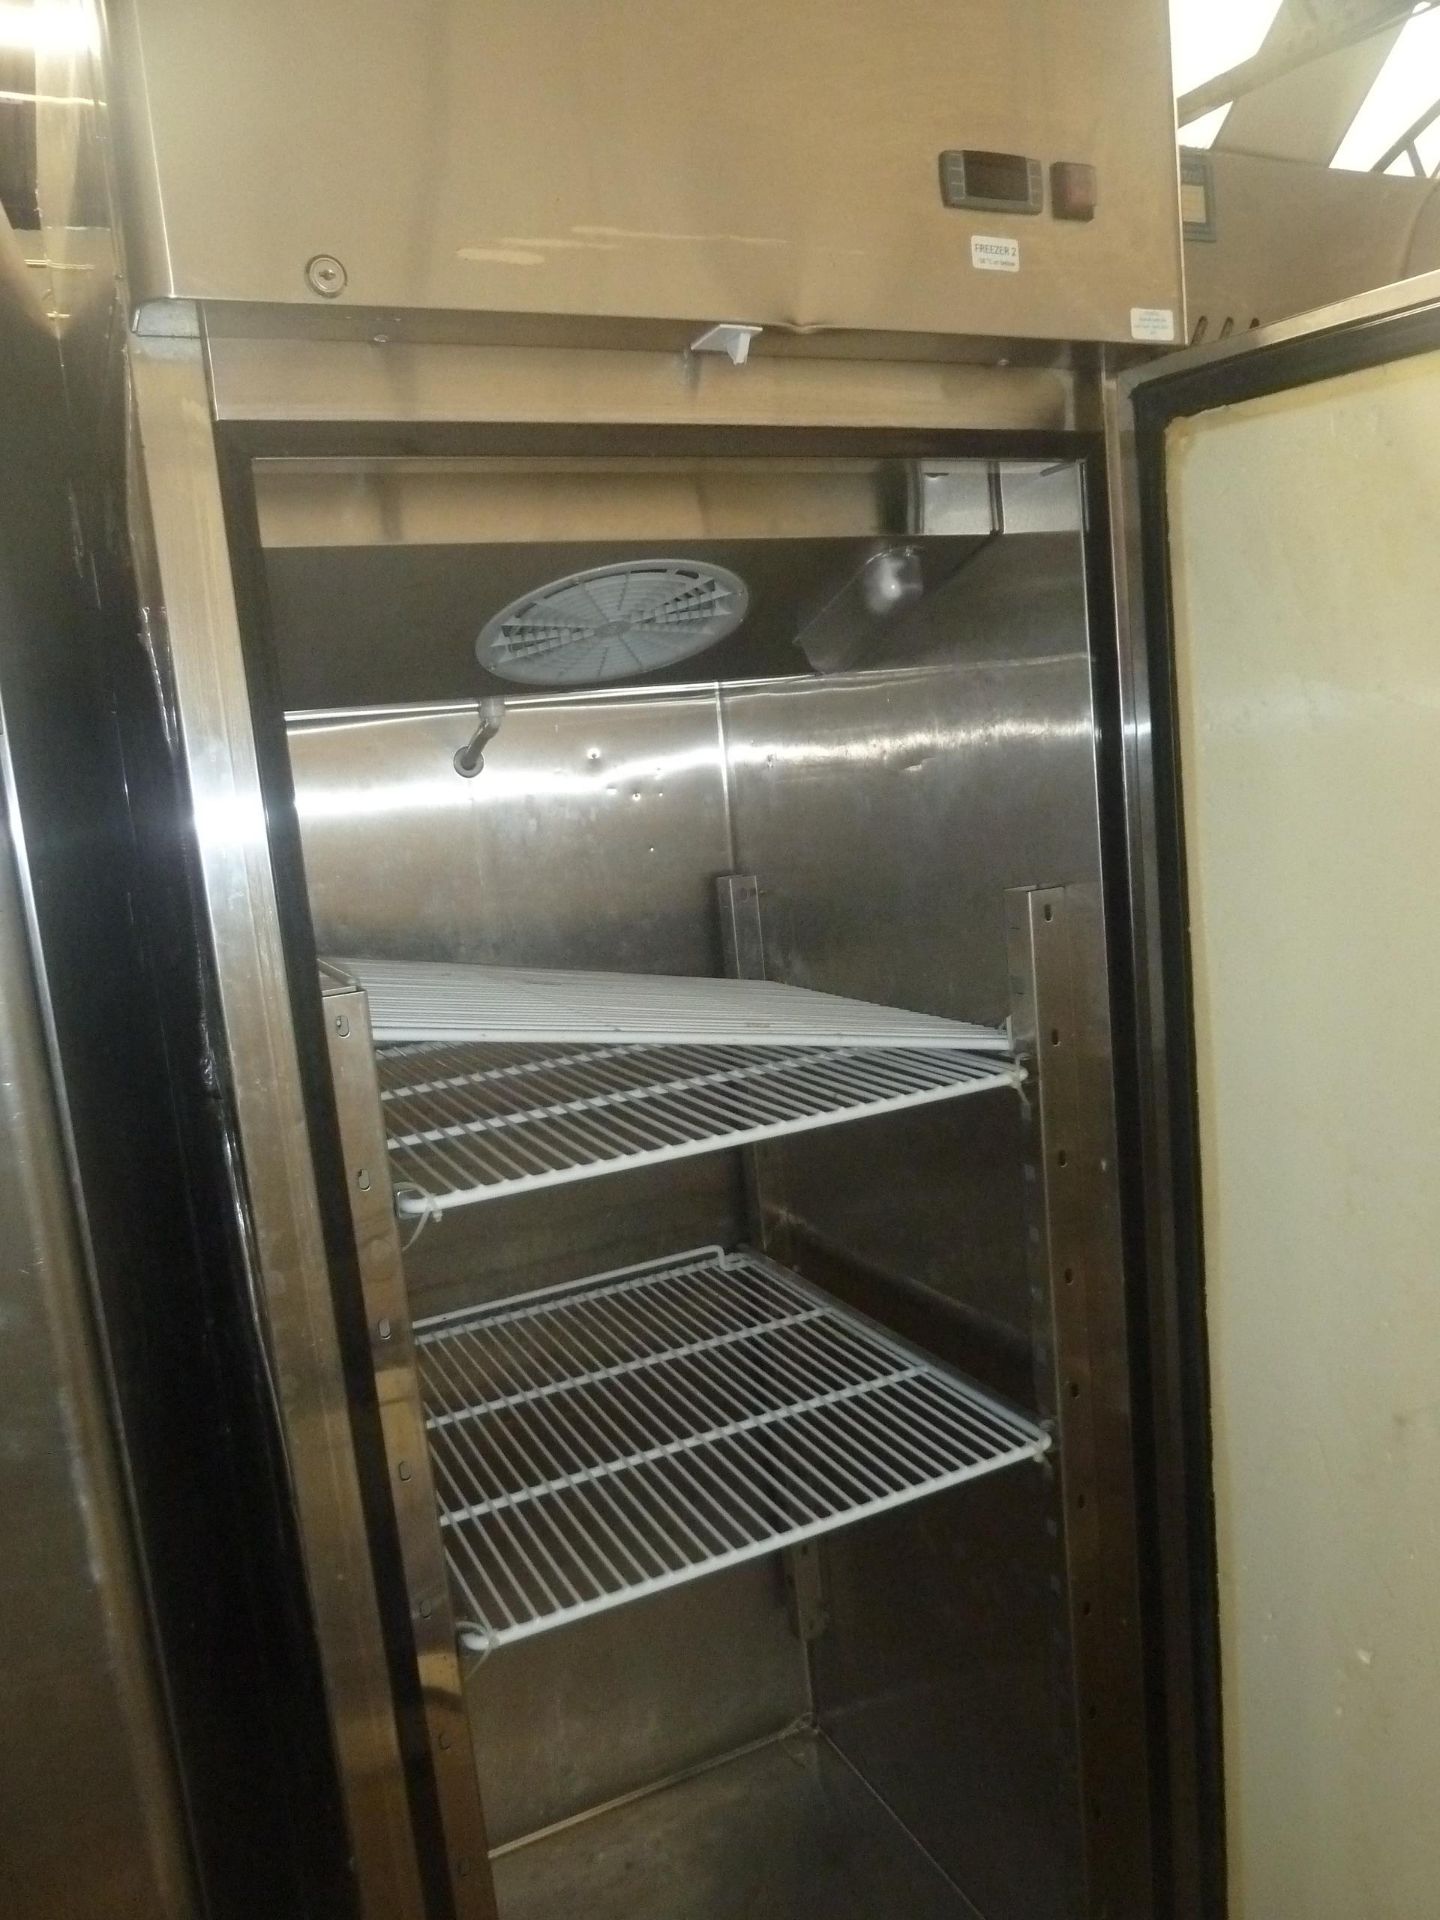 * Atosa S/S upright freezer MBF8113 on castors. 730w x 800d x 2100h - Image 2 of 3